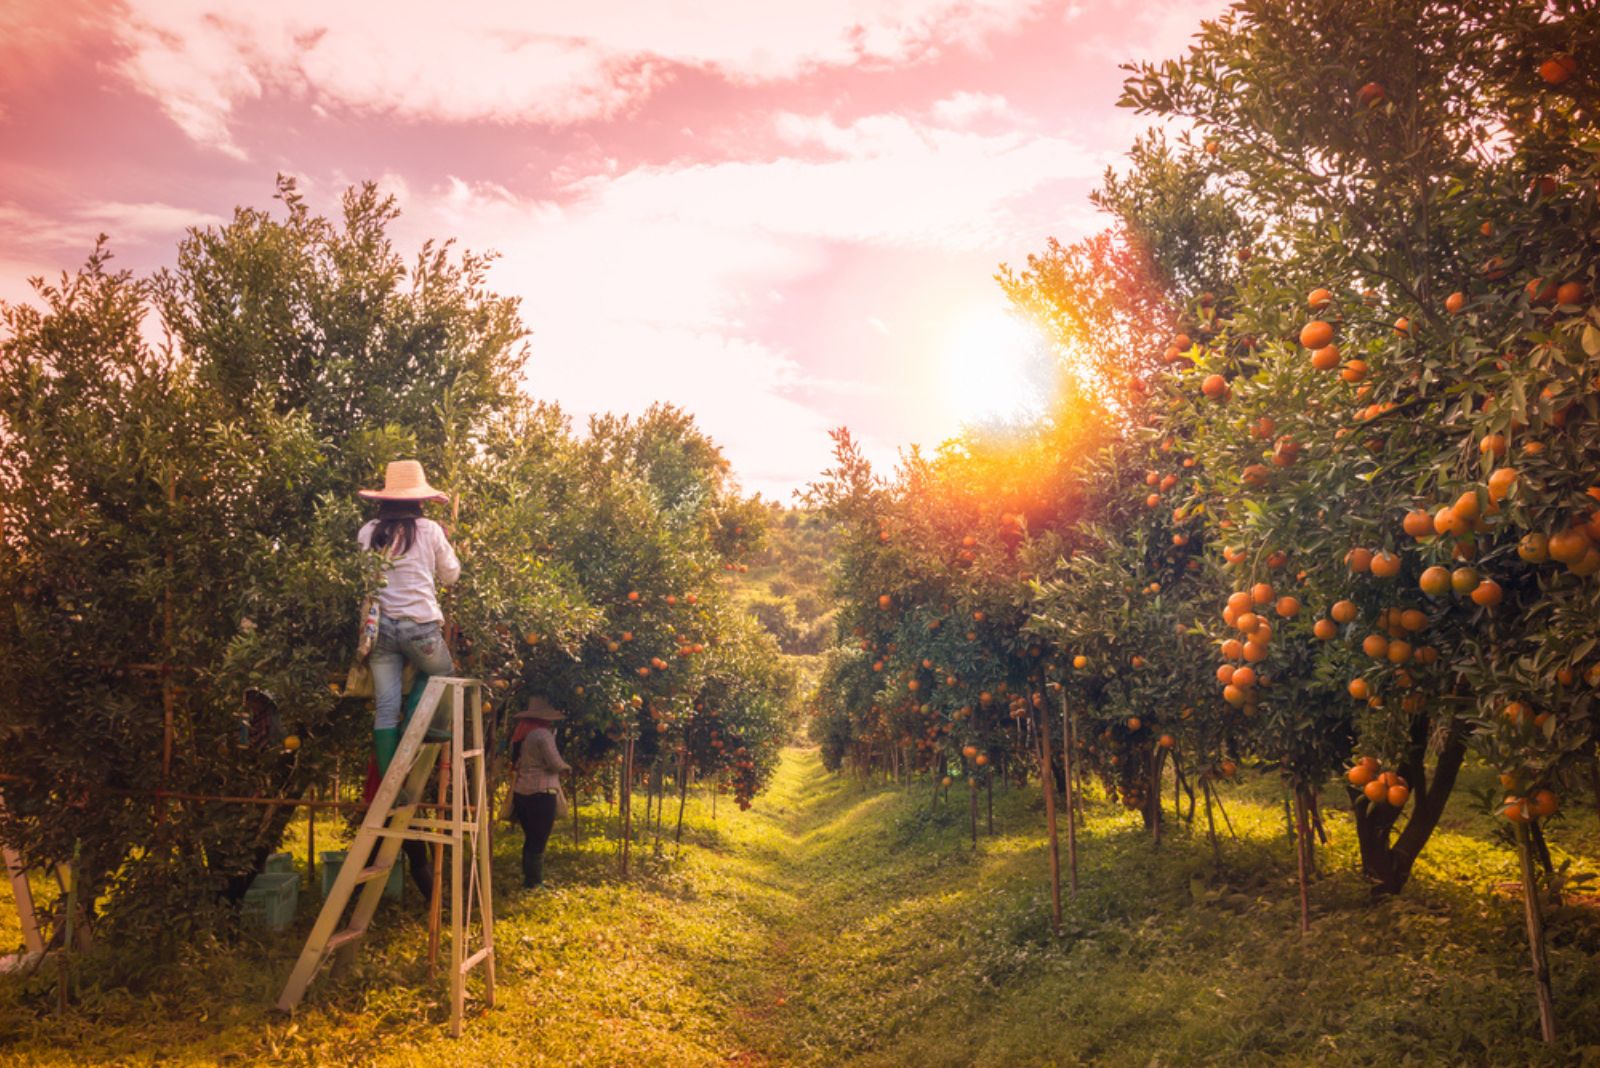 Farmer harvesting oranges in an orange tree field in morning